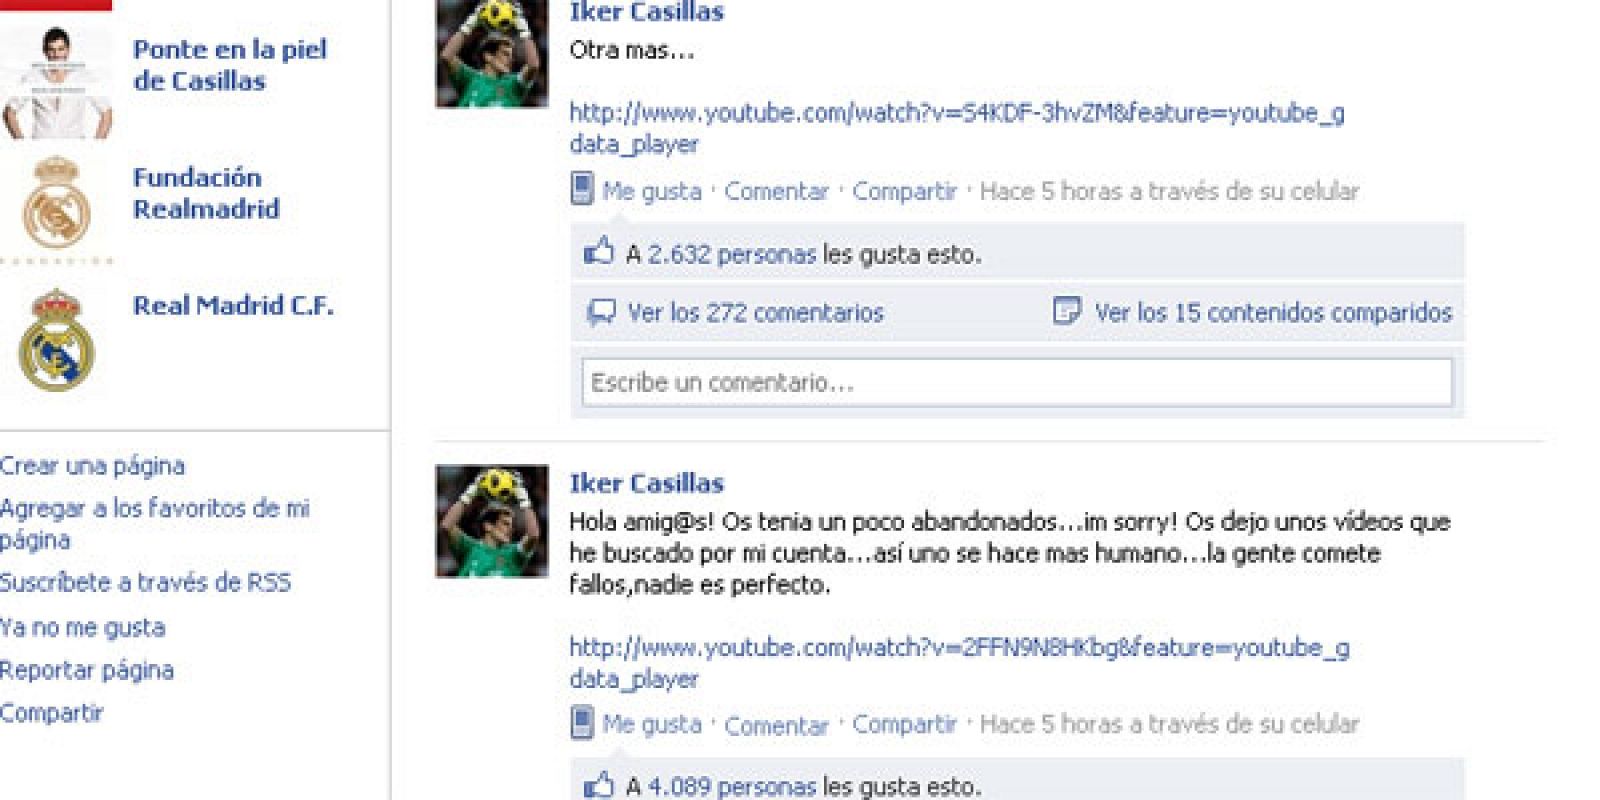 Imagen del perfil de facebook de Iker Casillas